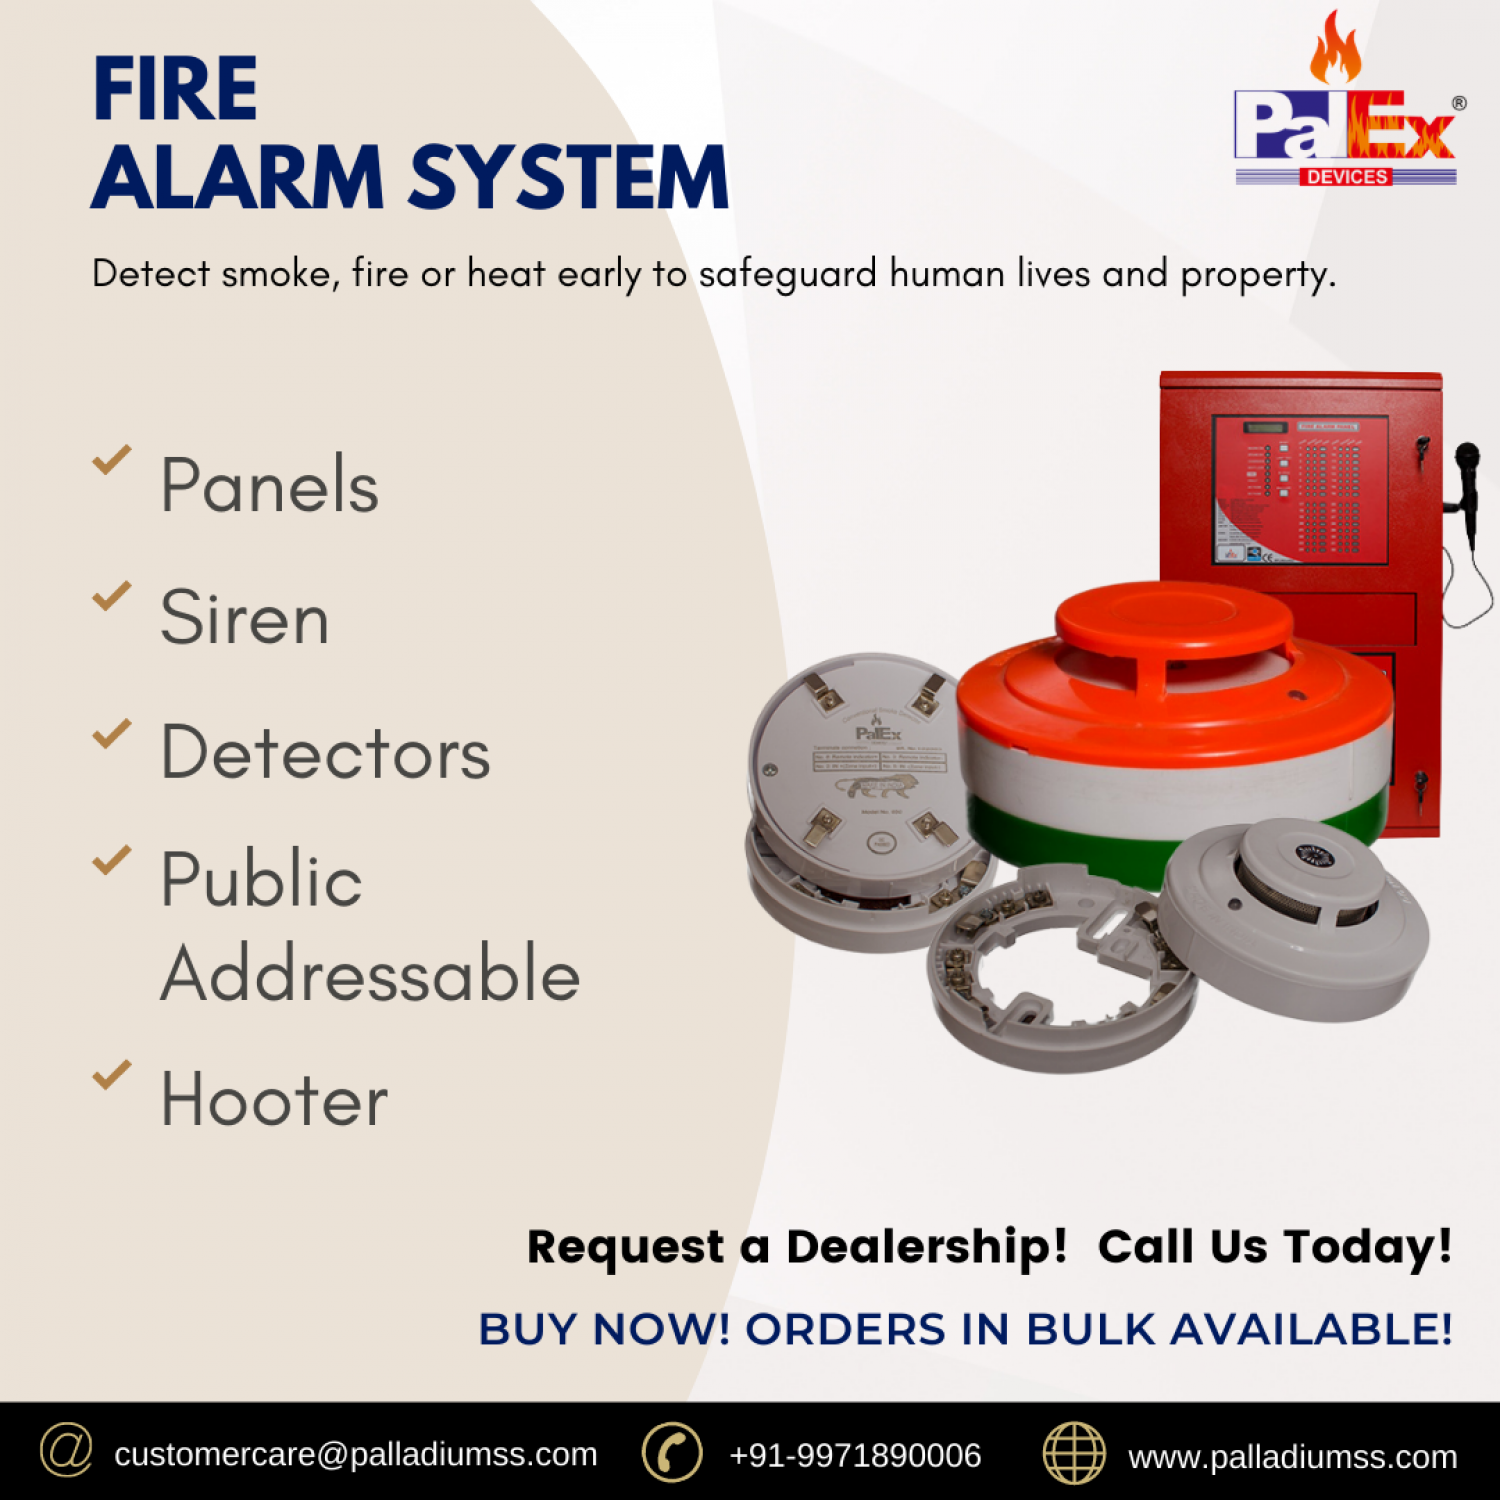 Palex 4 zone fire alarm system Infographic